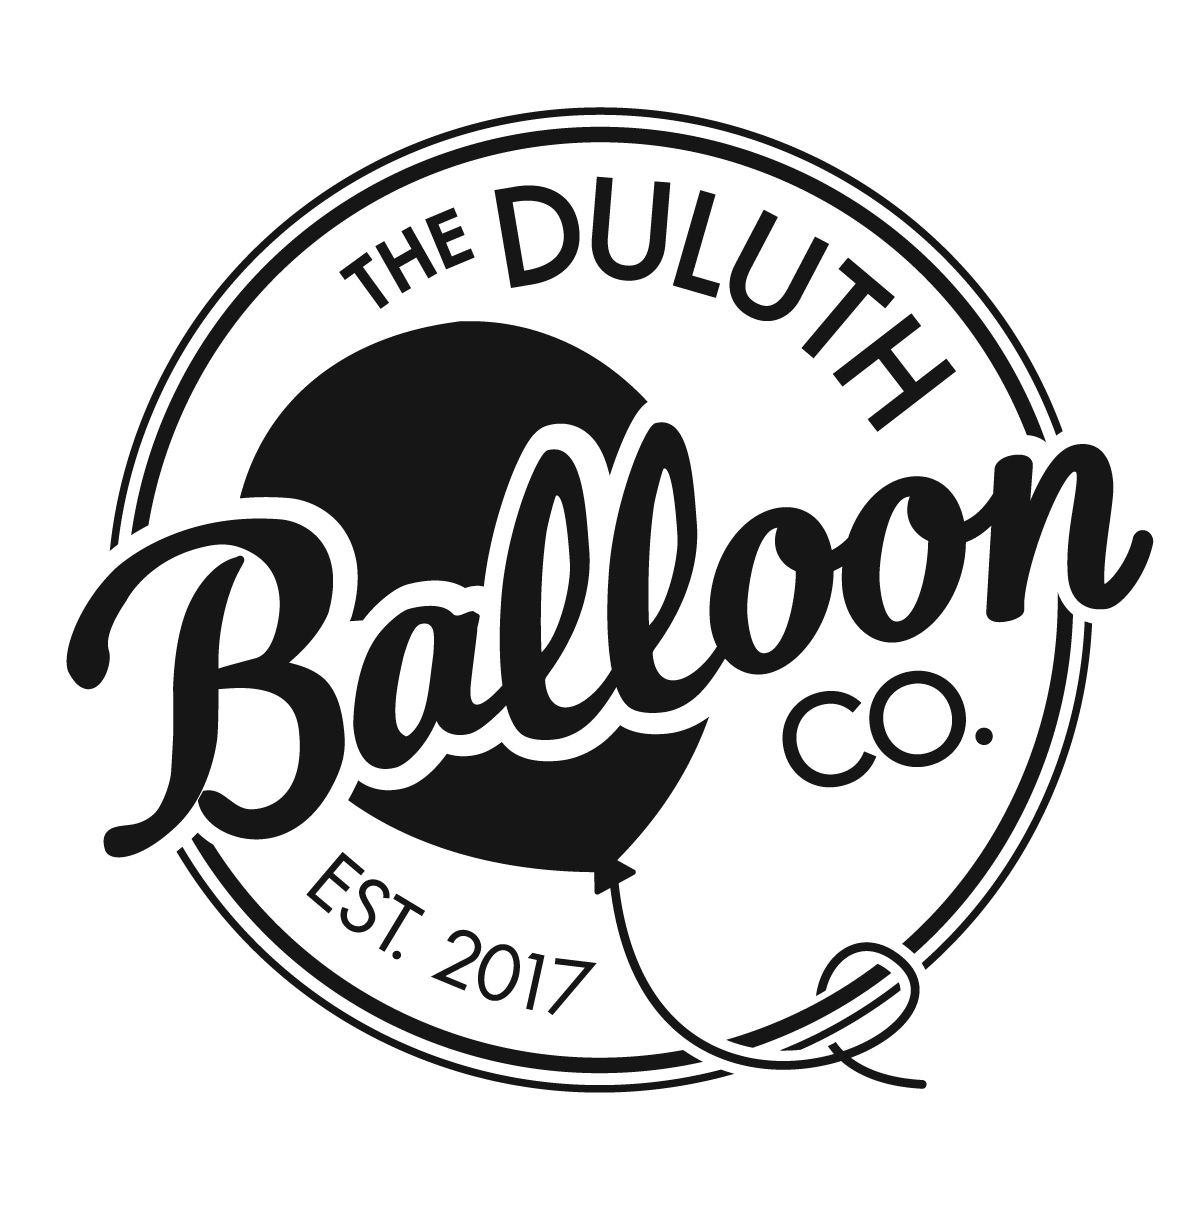 The Duluth Balloon Company